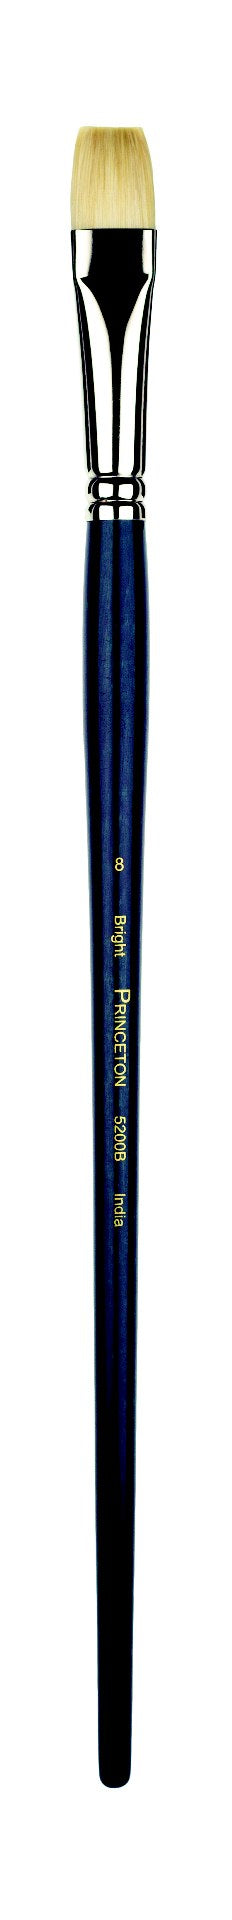 Princeton Art Brush 5200 Bristle Bright Interlocked Chungking Bristle